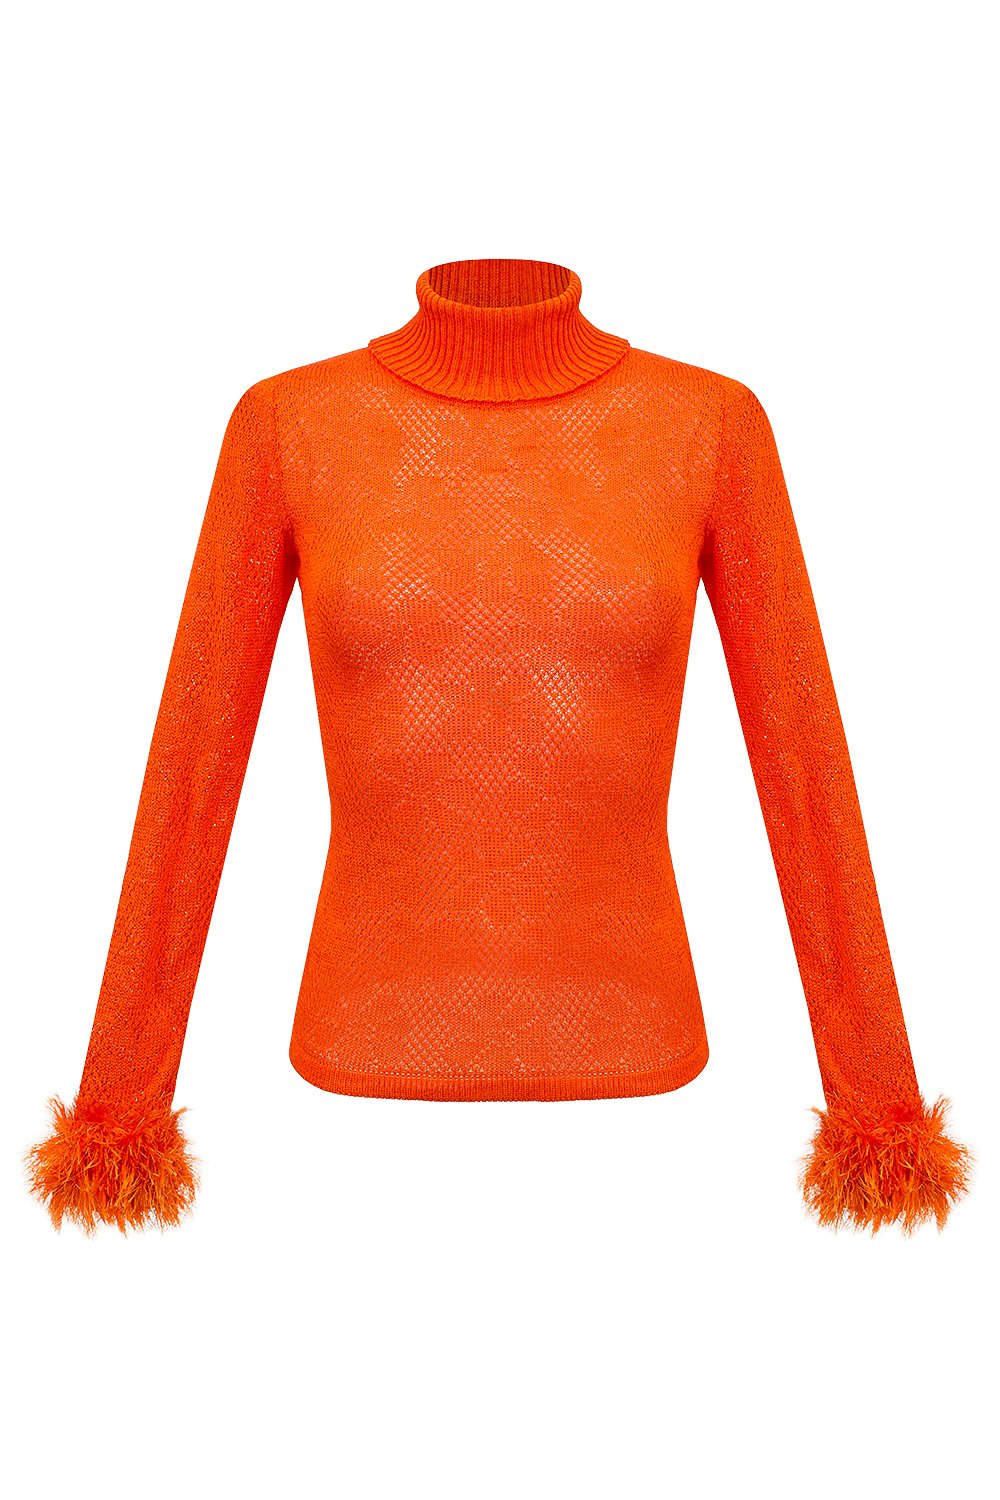 Shop Andreeva Women's Red Orange Knit Turtleneck With Handmade Knit Details